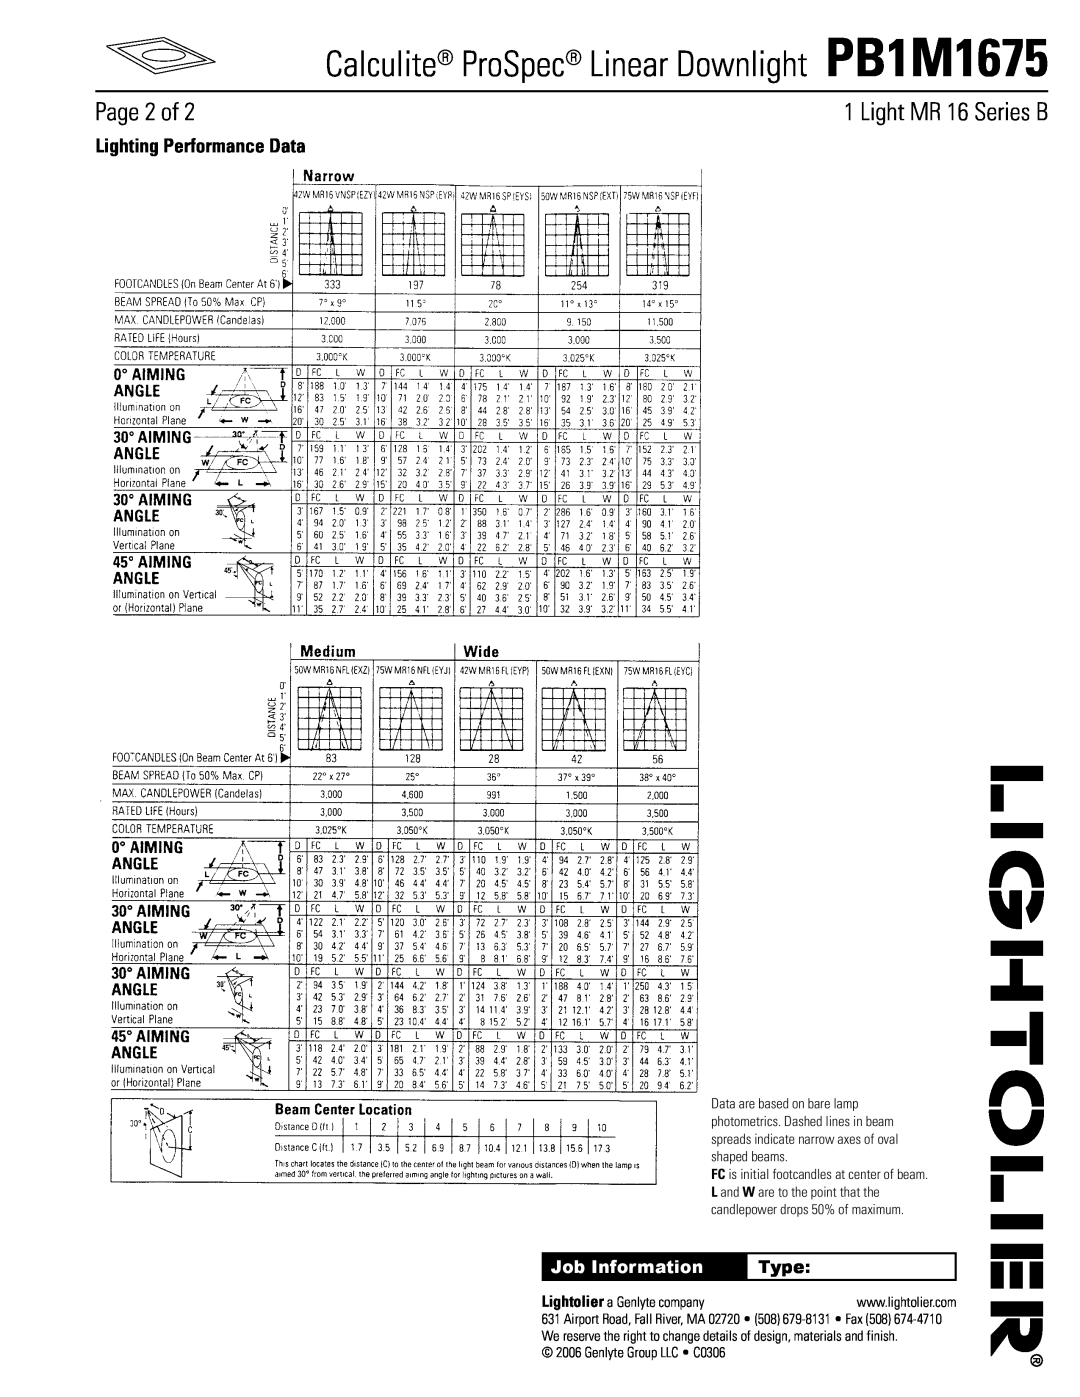 Lightolier PB1M1675 manual Page 2 of, Light MR 16 Series B, Lighting Performance Data, Type, Job Information 